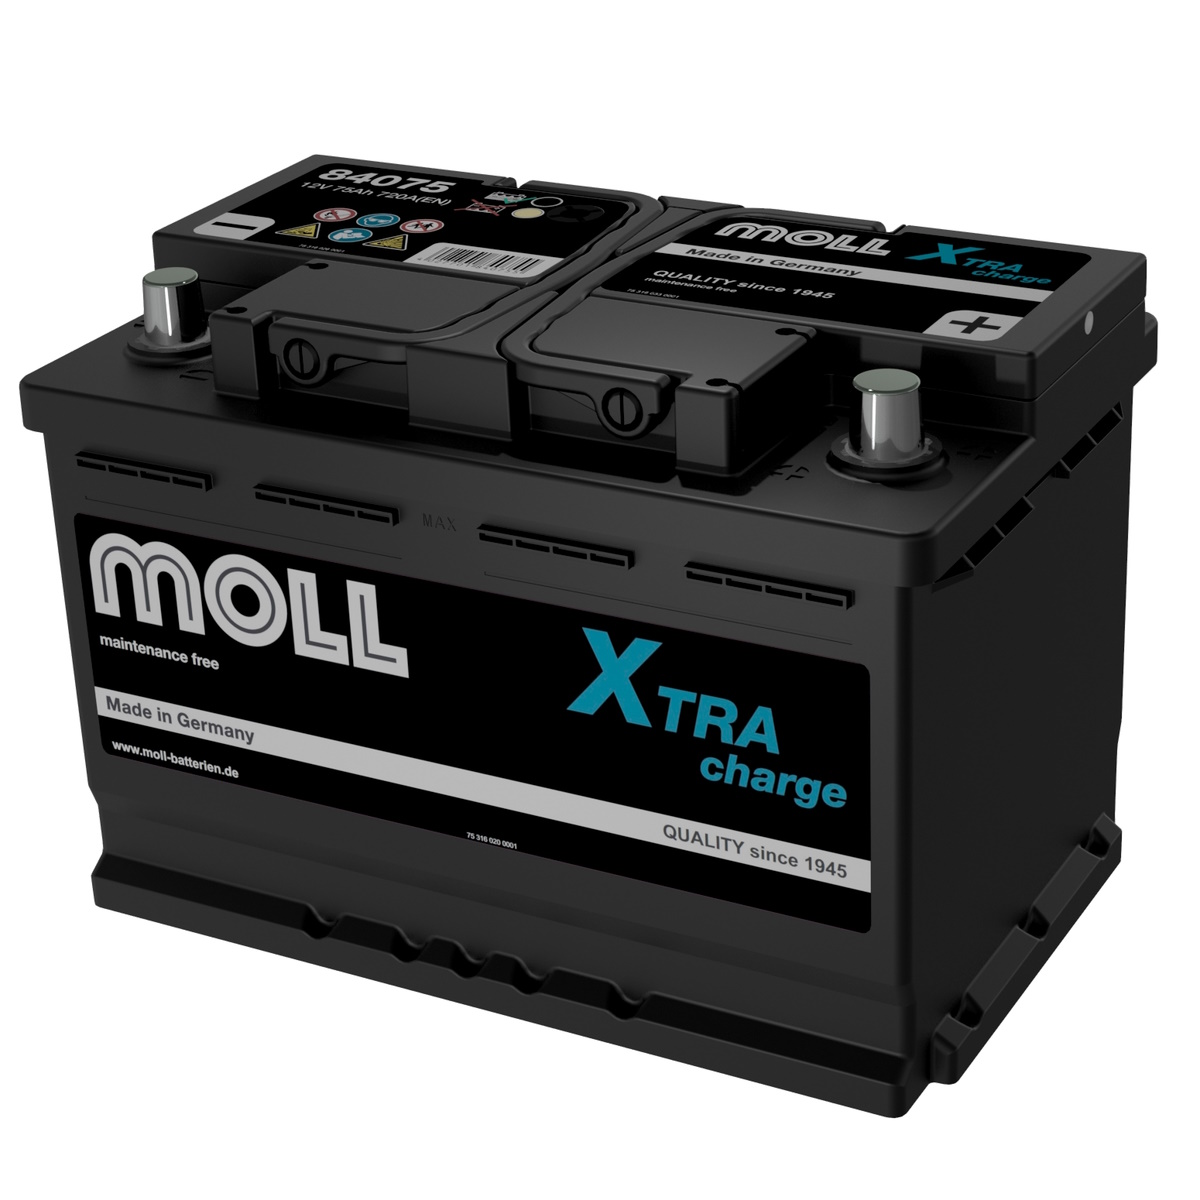 Аккумуляторы MOLL MOLL X-TRA charge 75R купить 8 906 062 07 78